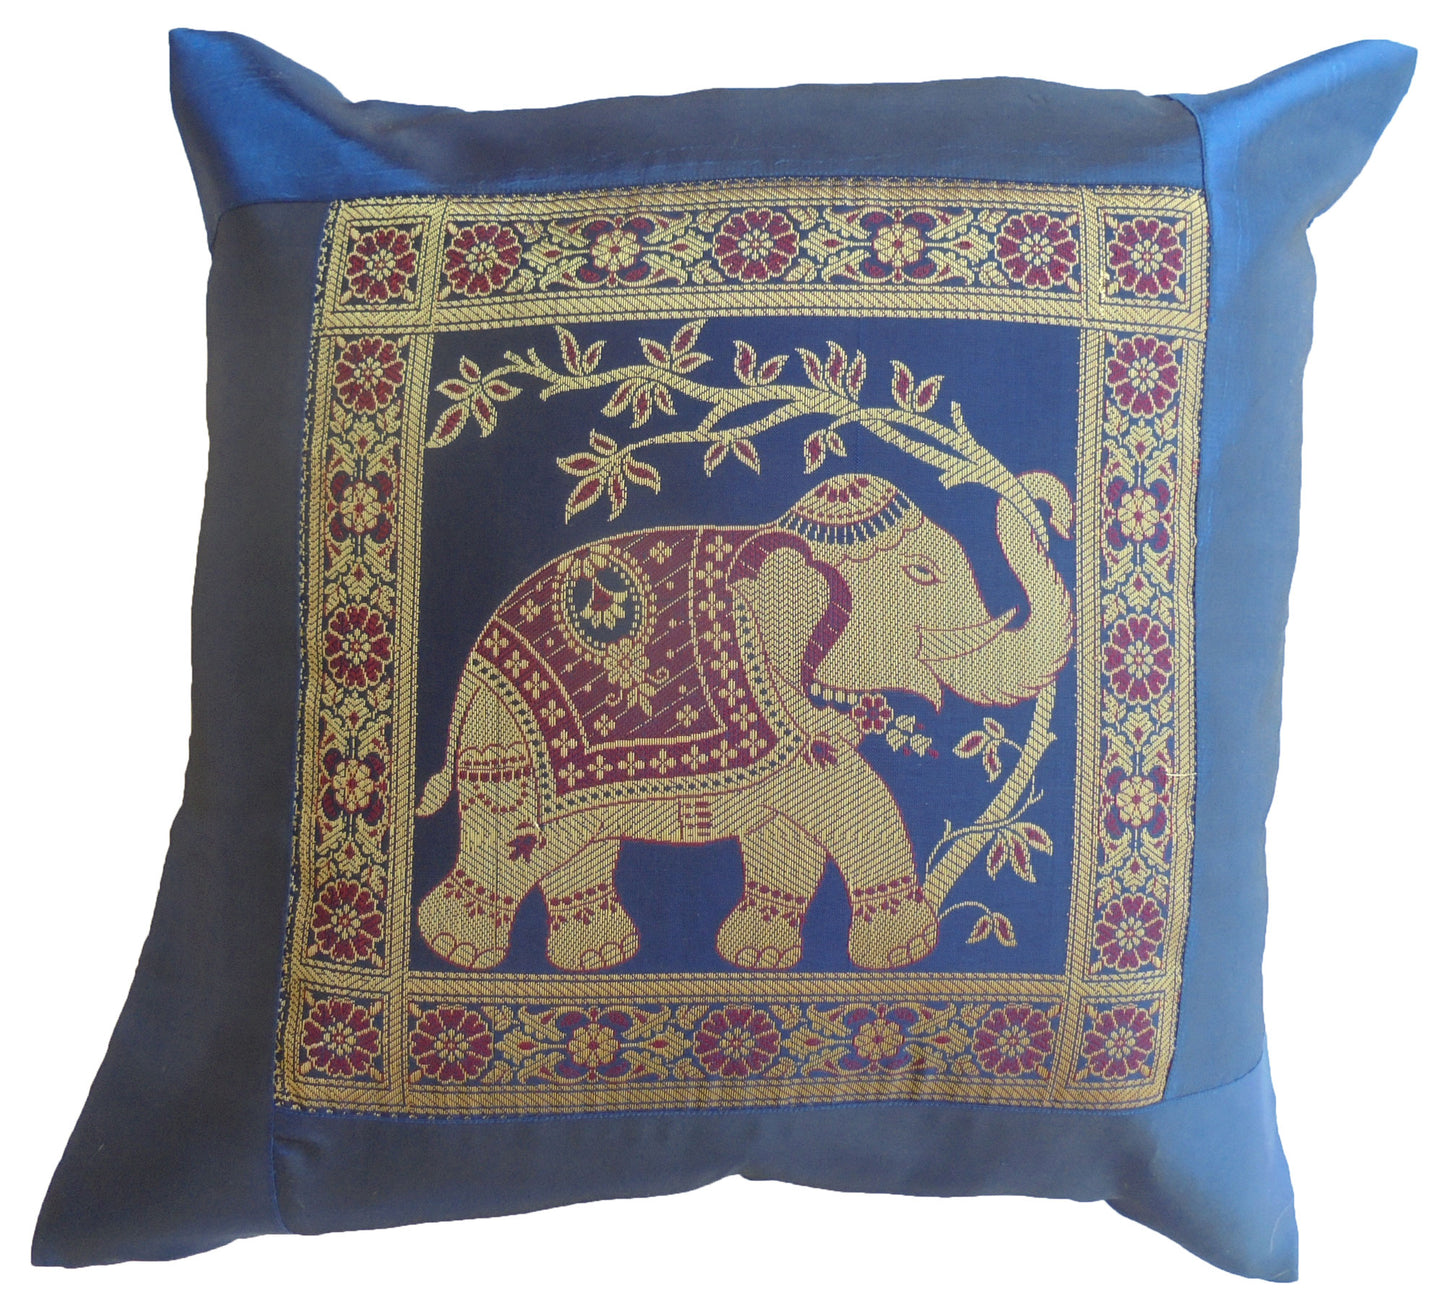 Kissen Kissenbezug Motiv grosser Elefant blau 40x40cm/15.5x15.5in Thai Seide Sofa Bett Gartenstuhl